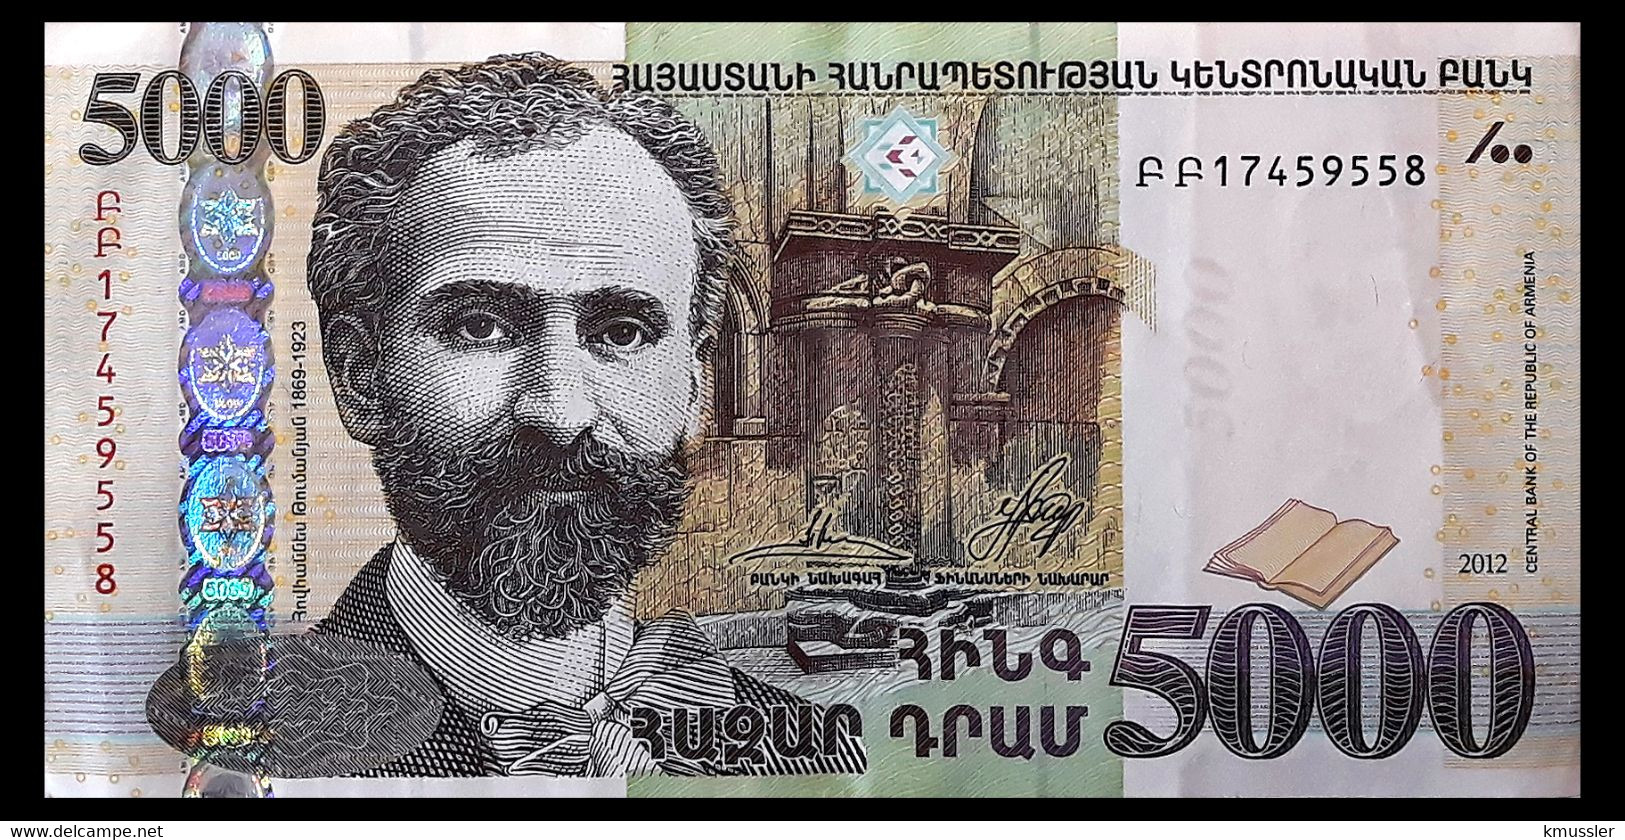 # # # Banknote Aus Armenien 5.000 Dram # # # - Arménie